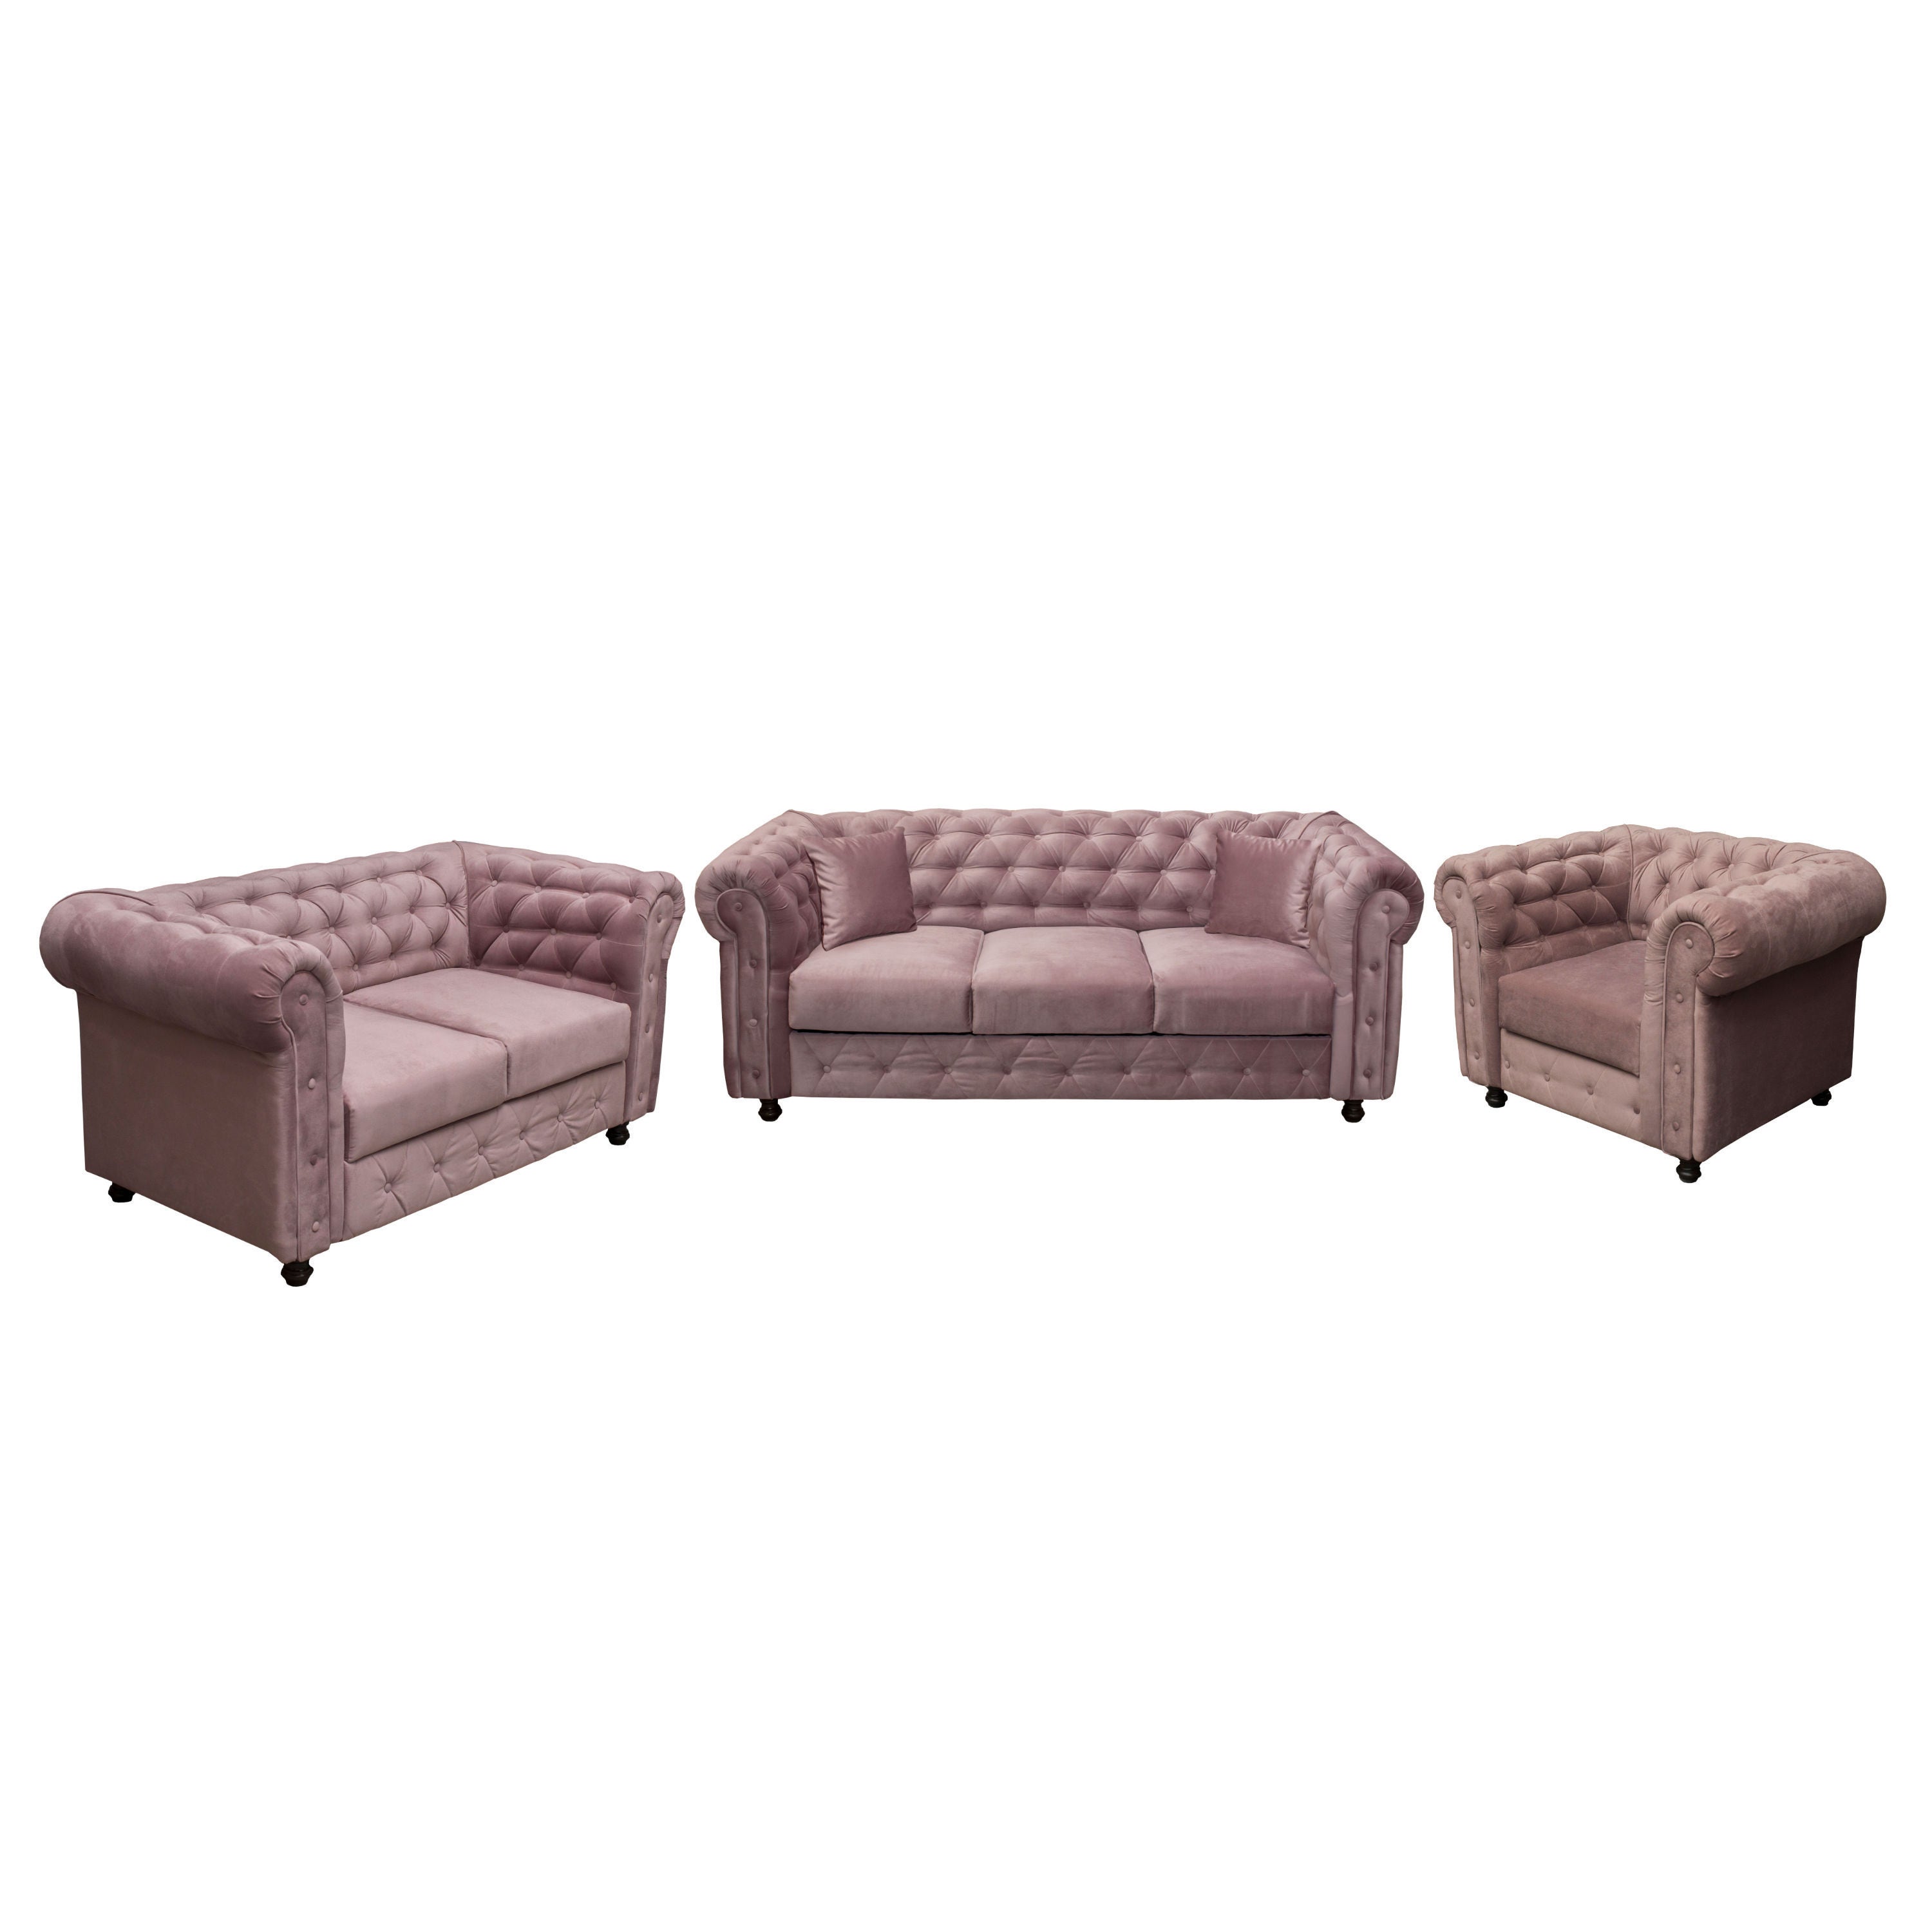 Dedeman - Canapea fixa + canapea extensibila + Chesterfield, roz prafuit, 3C - Dedicat planurilor